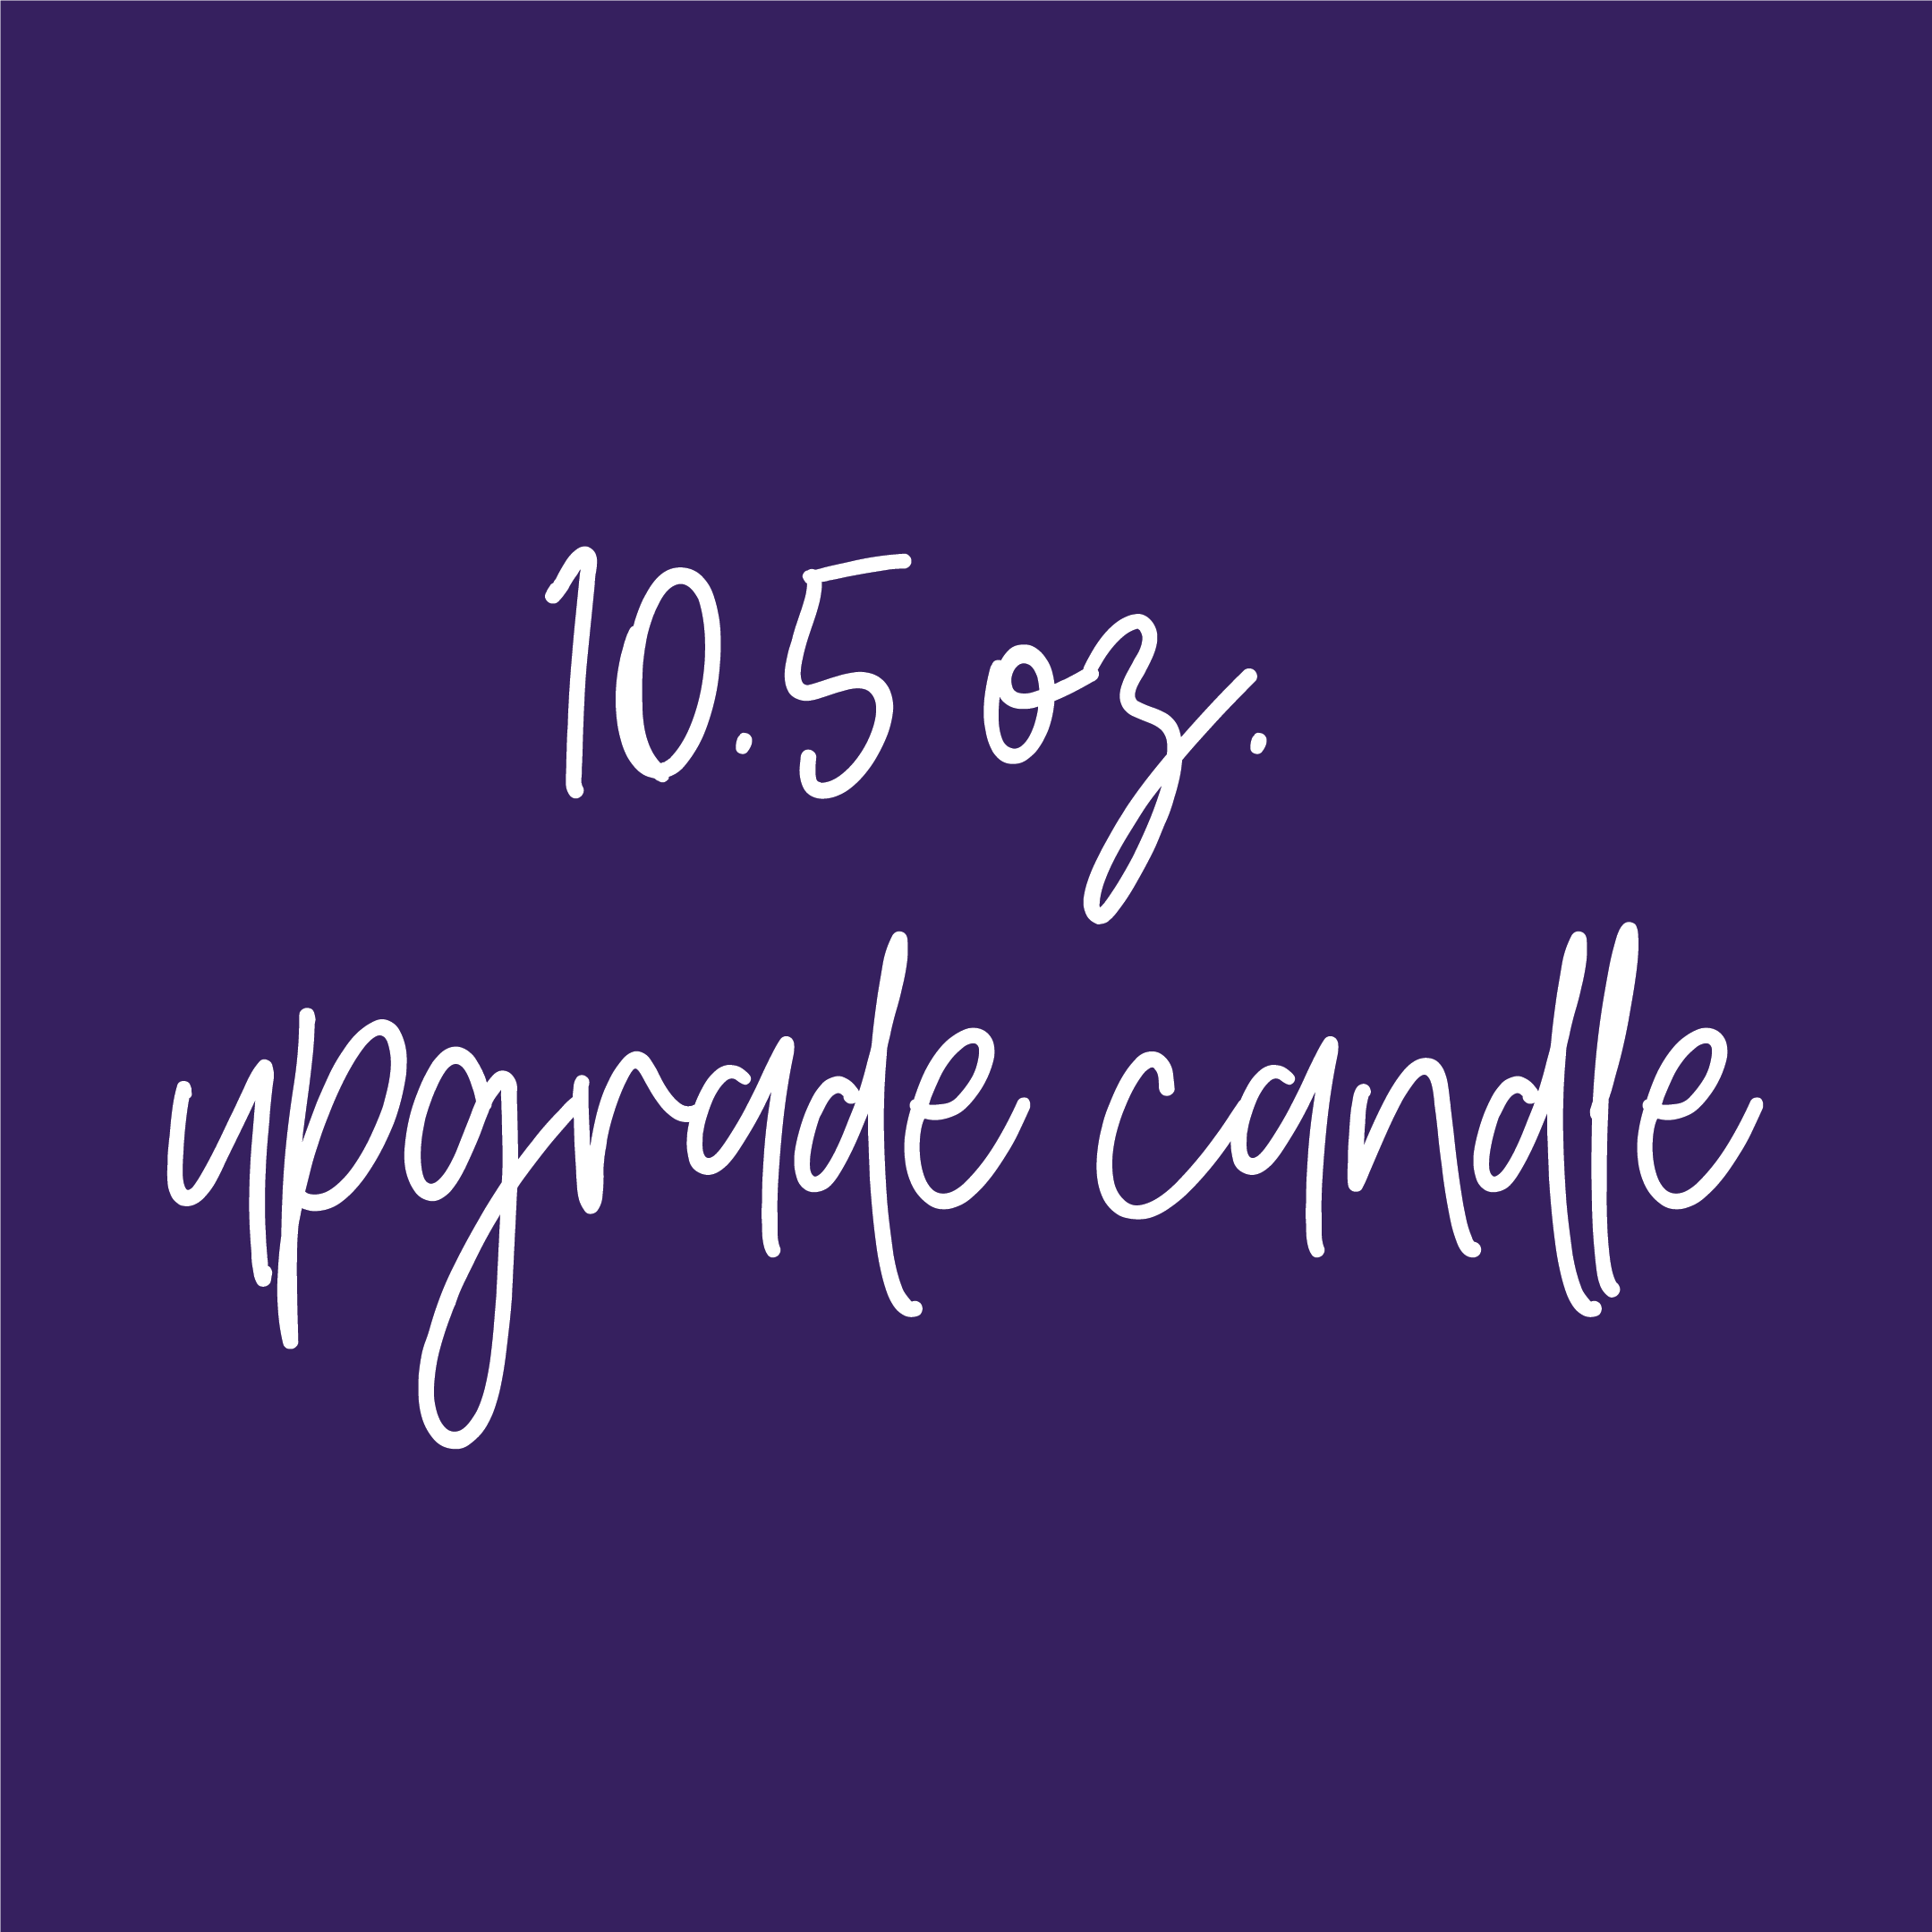 10.5 oz. Upgrade Candle Reorder